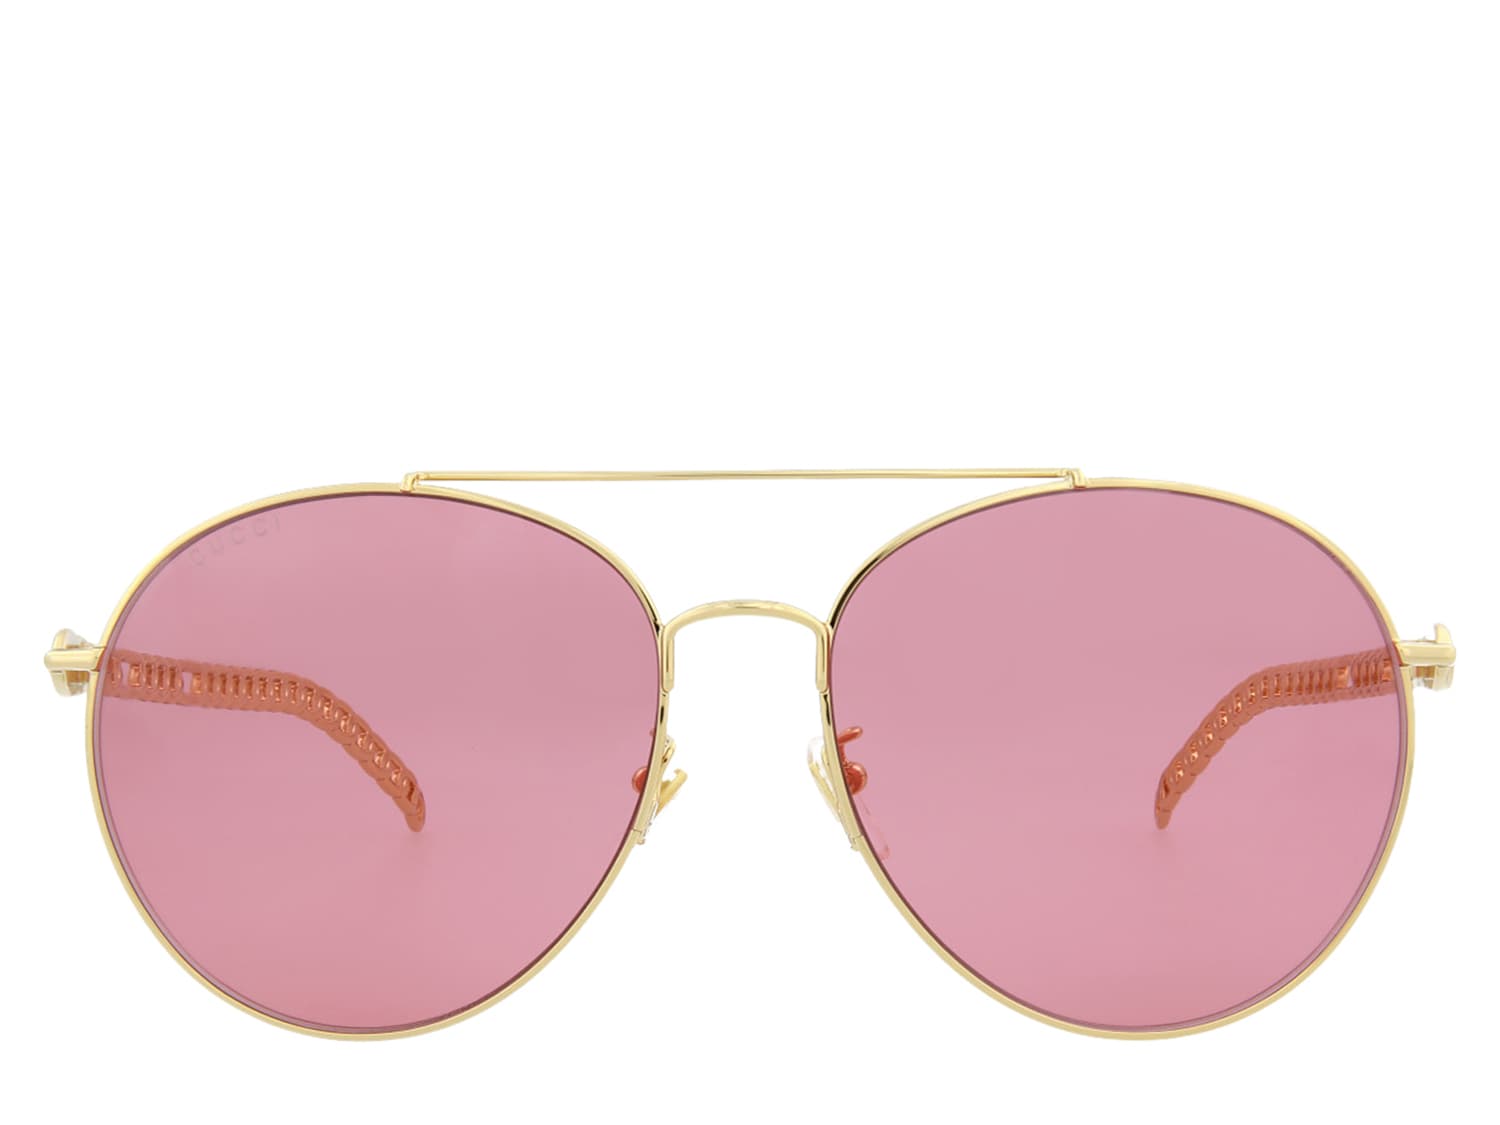 Gucci Aviator Sunglasses - FINAL SALE - Free Shipping | DSW